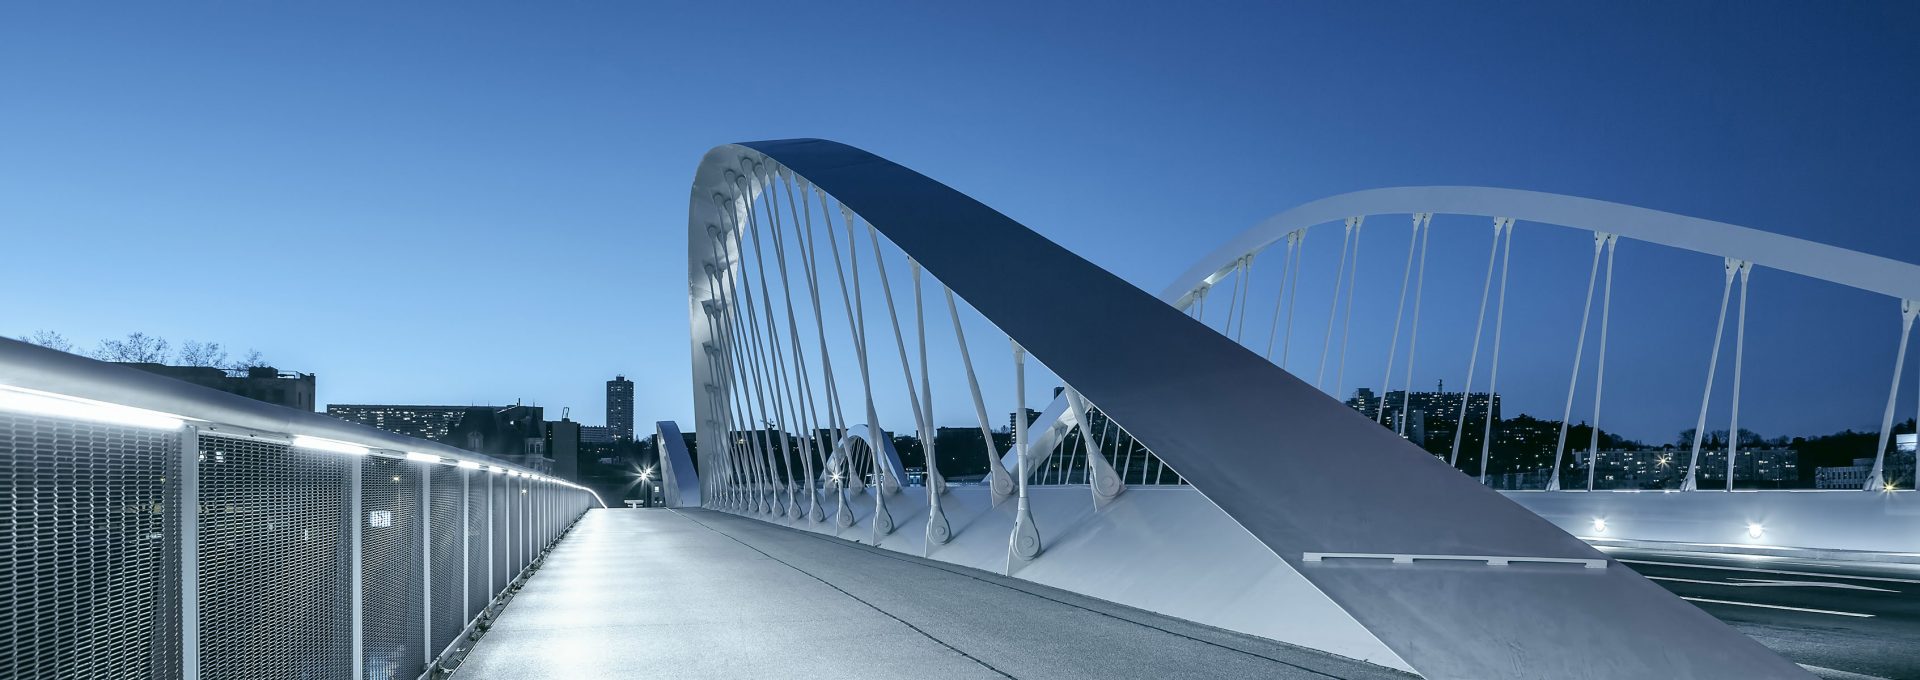 Noack Engineering | Brückenbau